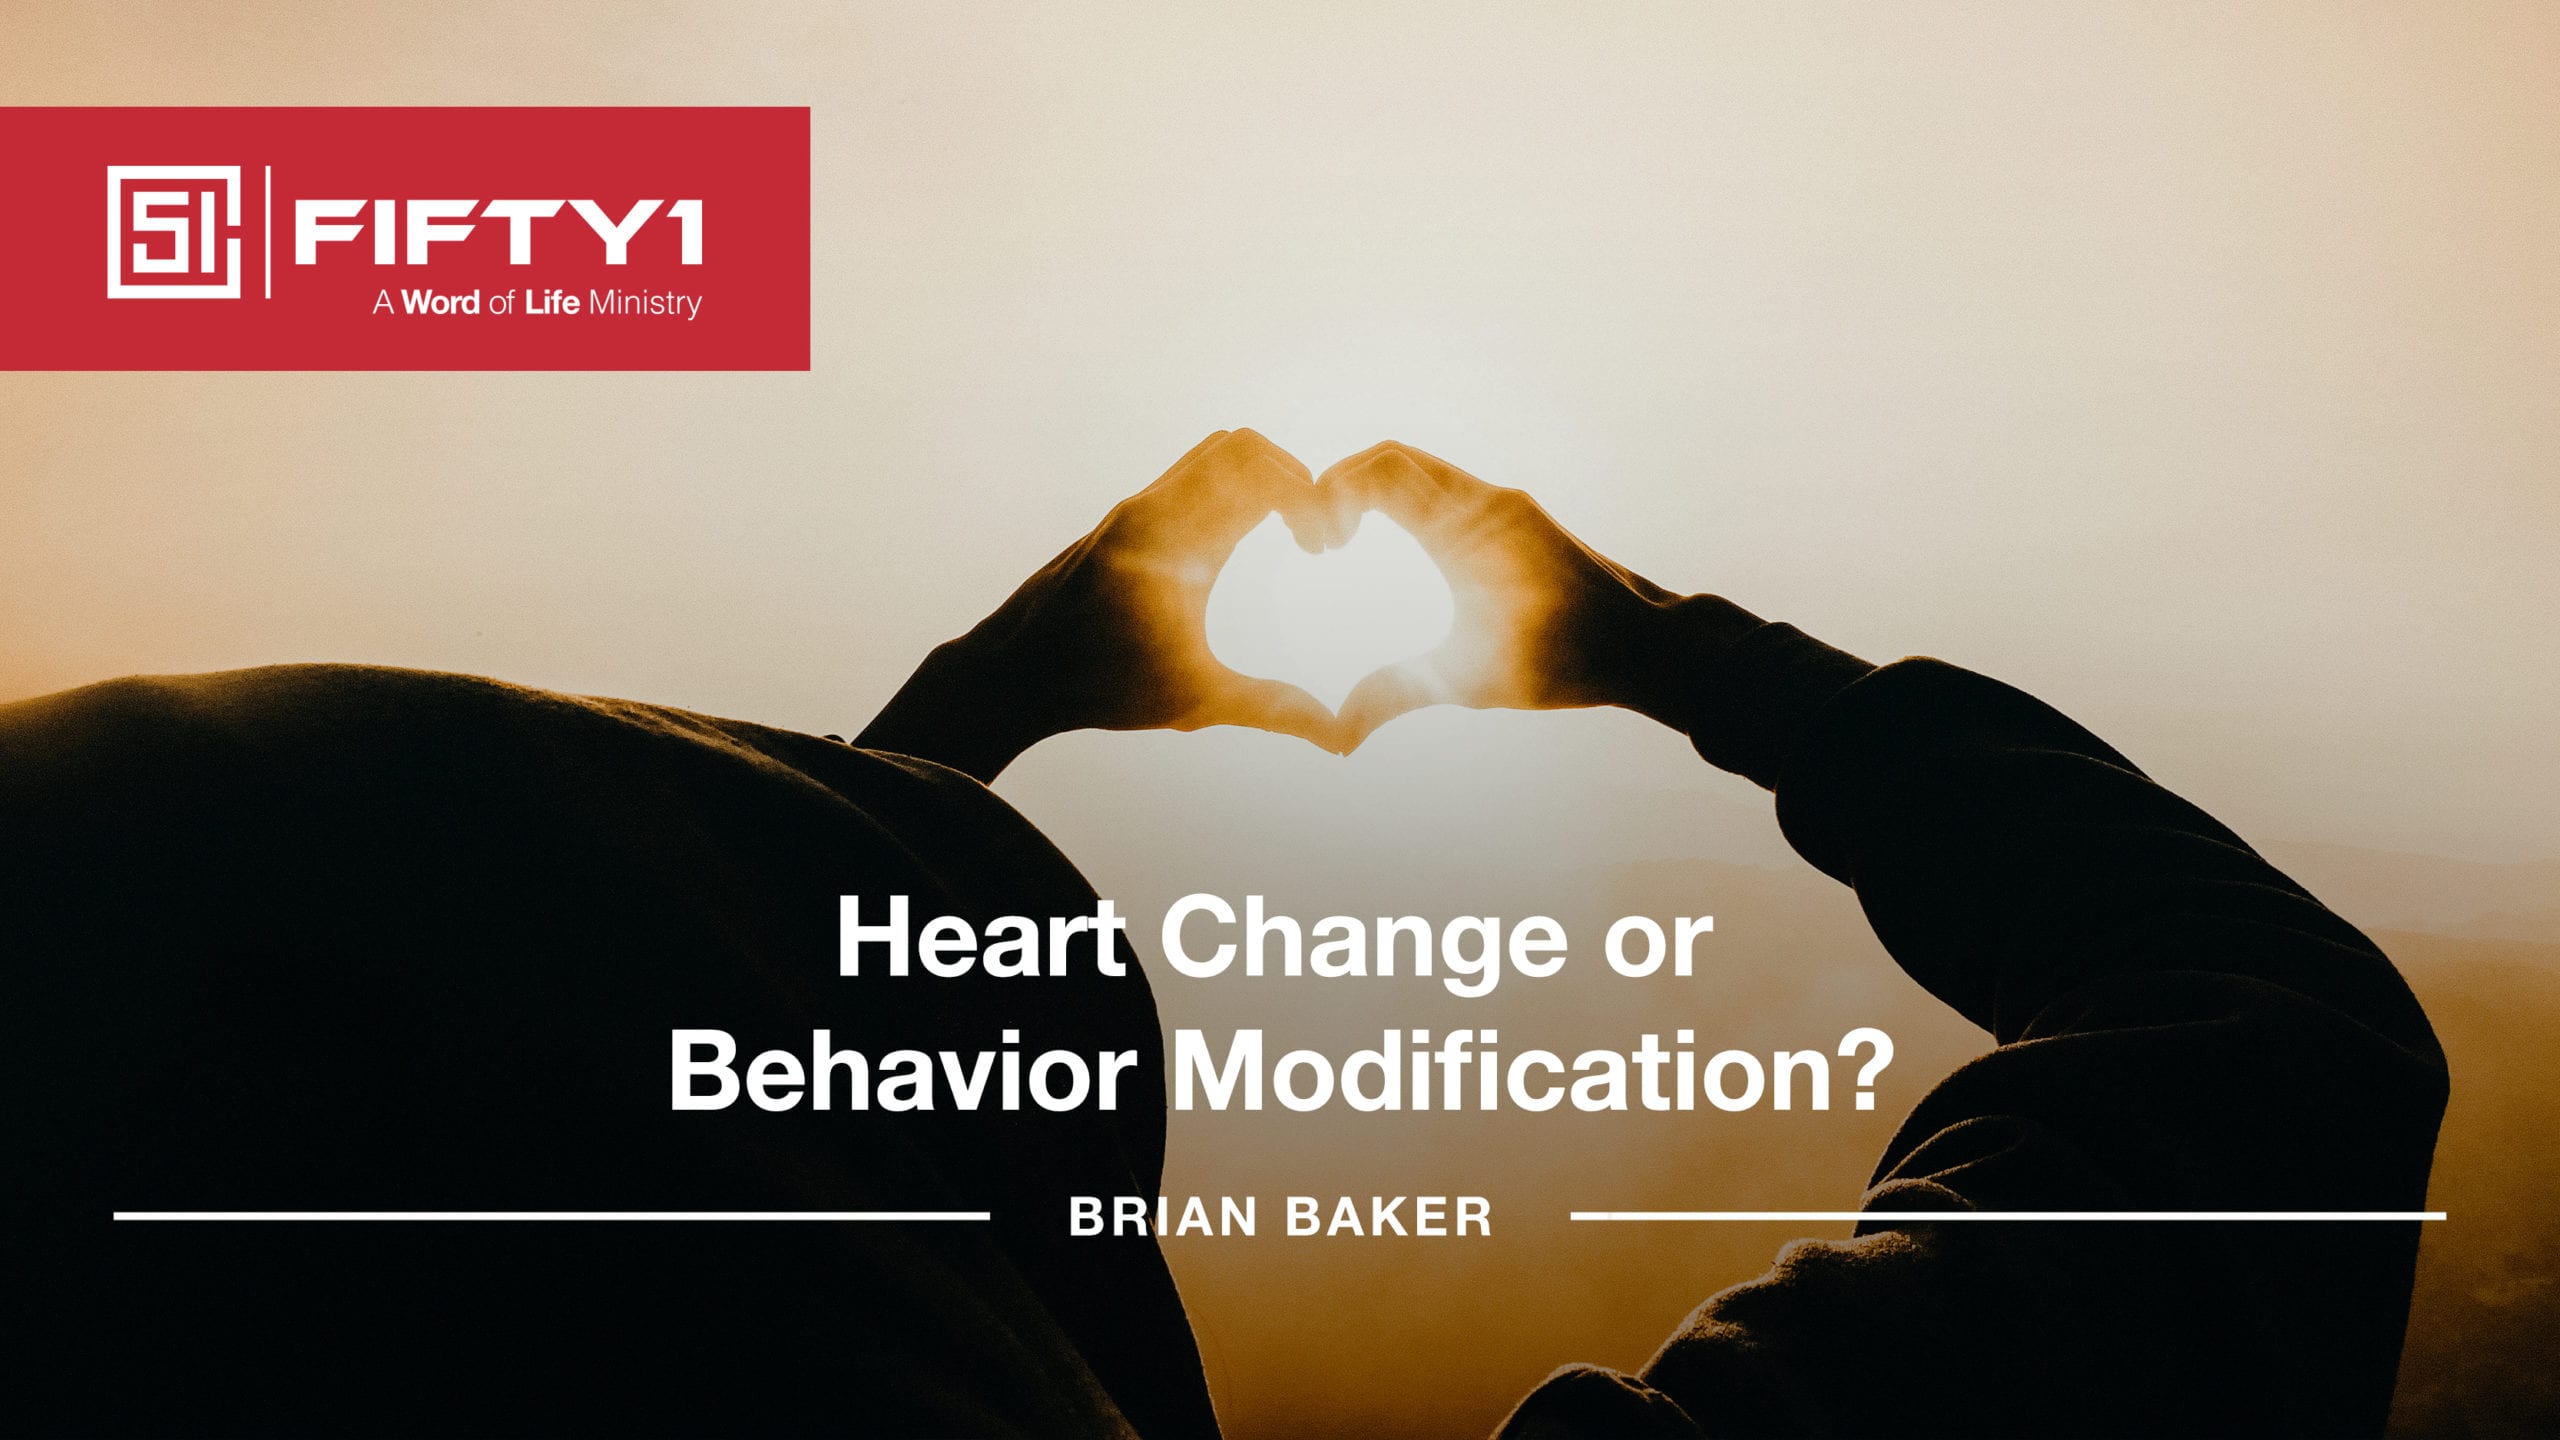 Heart Change or Behavior Modification?